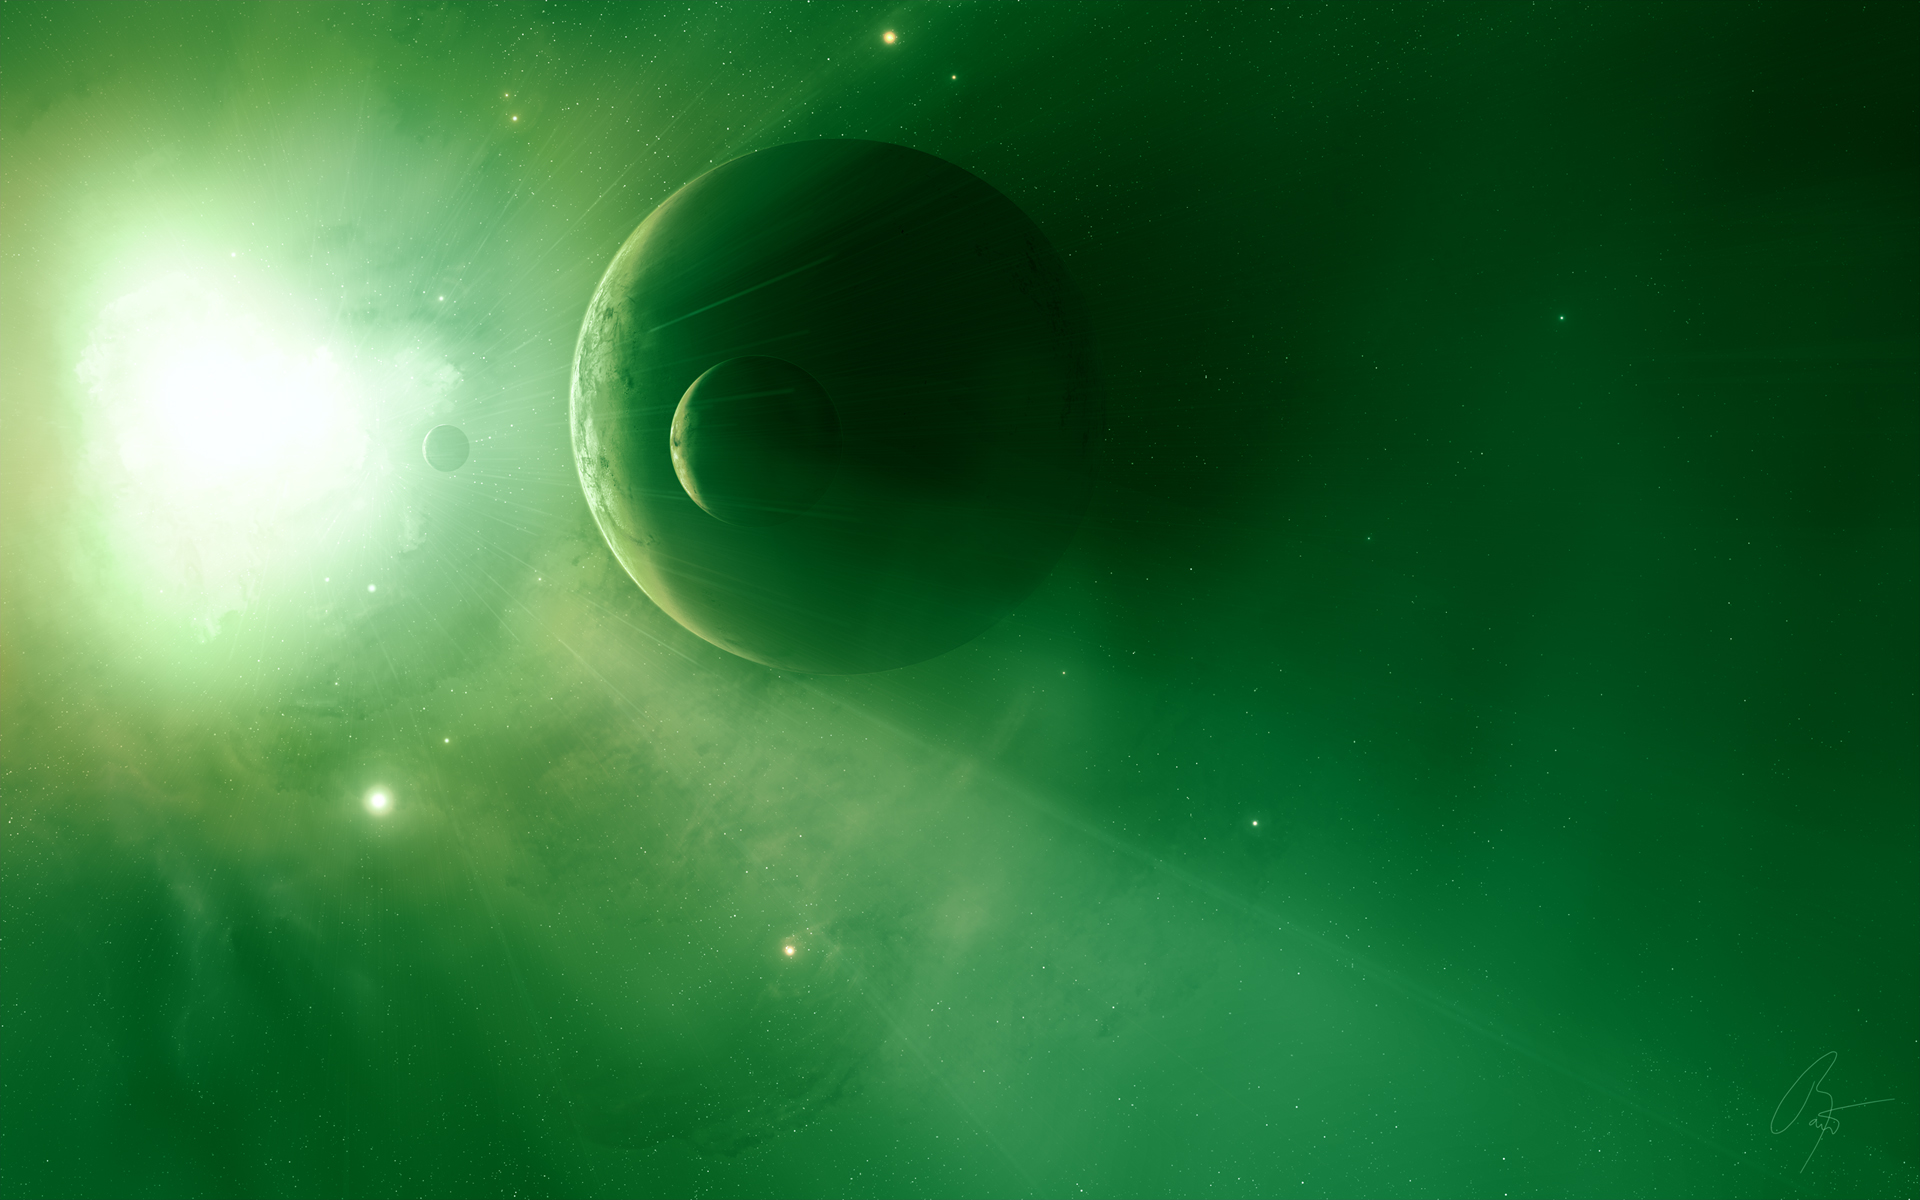 outer space, planets - desktop wallpaper